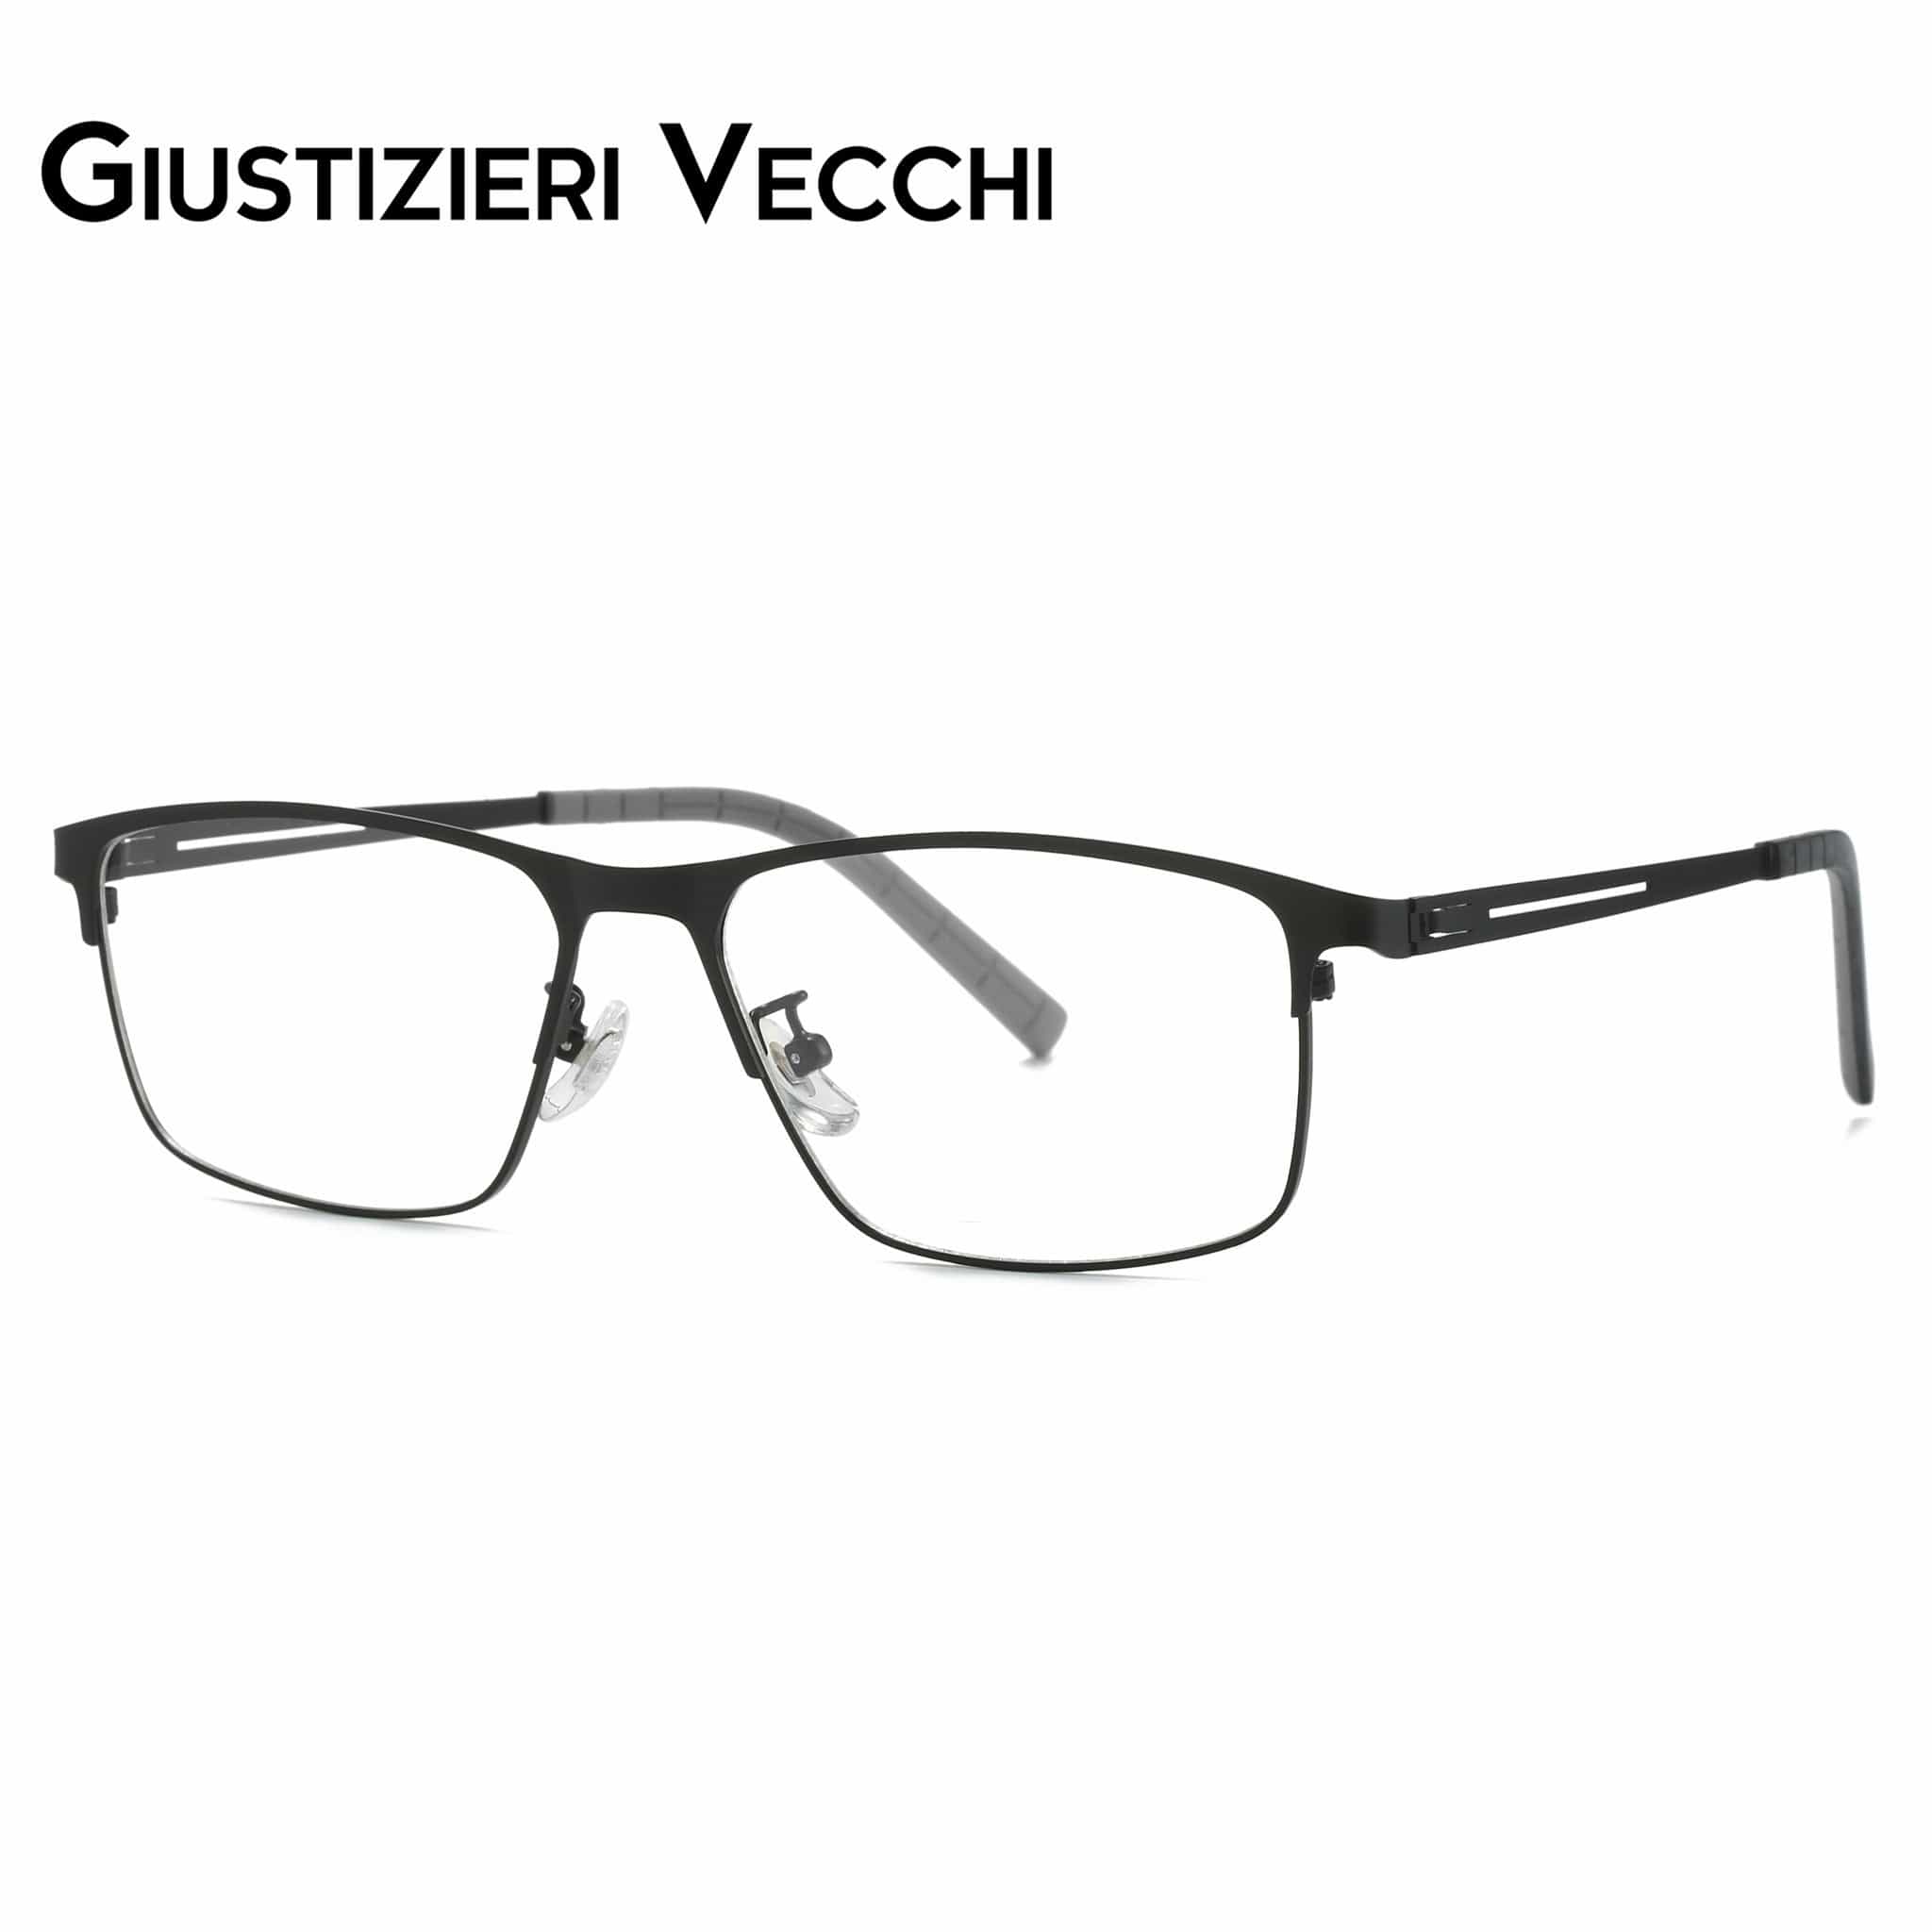 GIUSTIZIERI VECCHI Eyeglasses Black with Grey / Large Sunburst Uno